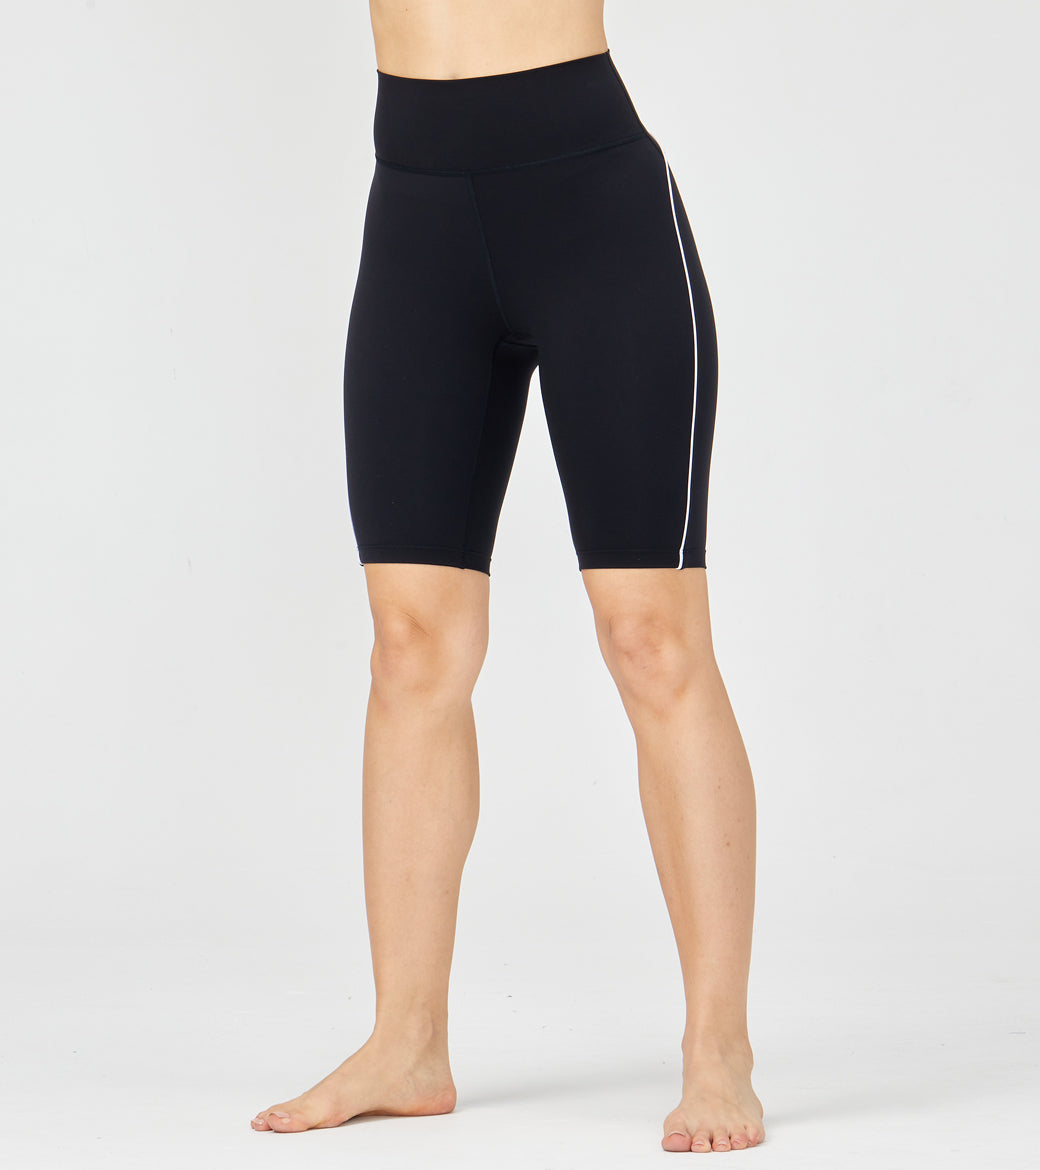 LOVESOFT Comfortable Sports Yoga Sports Cropped Pants